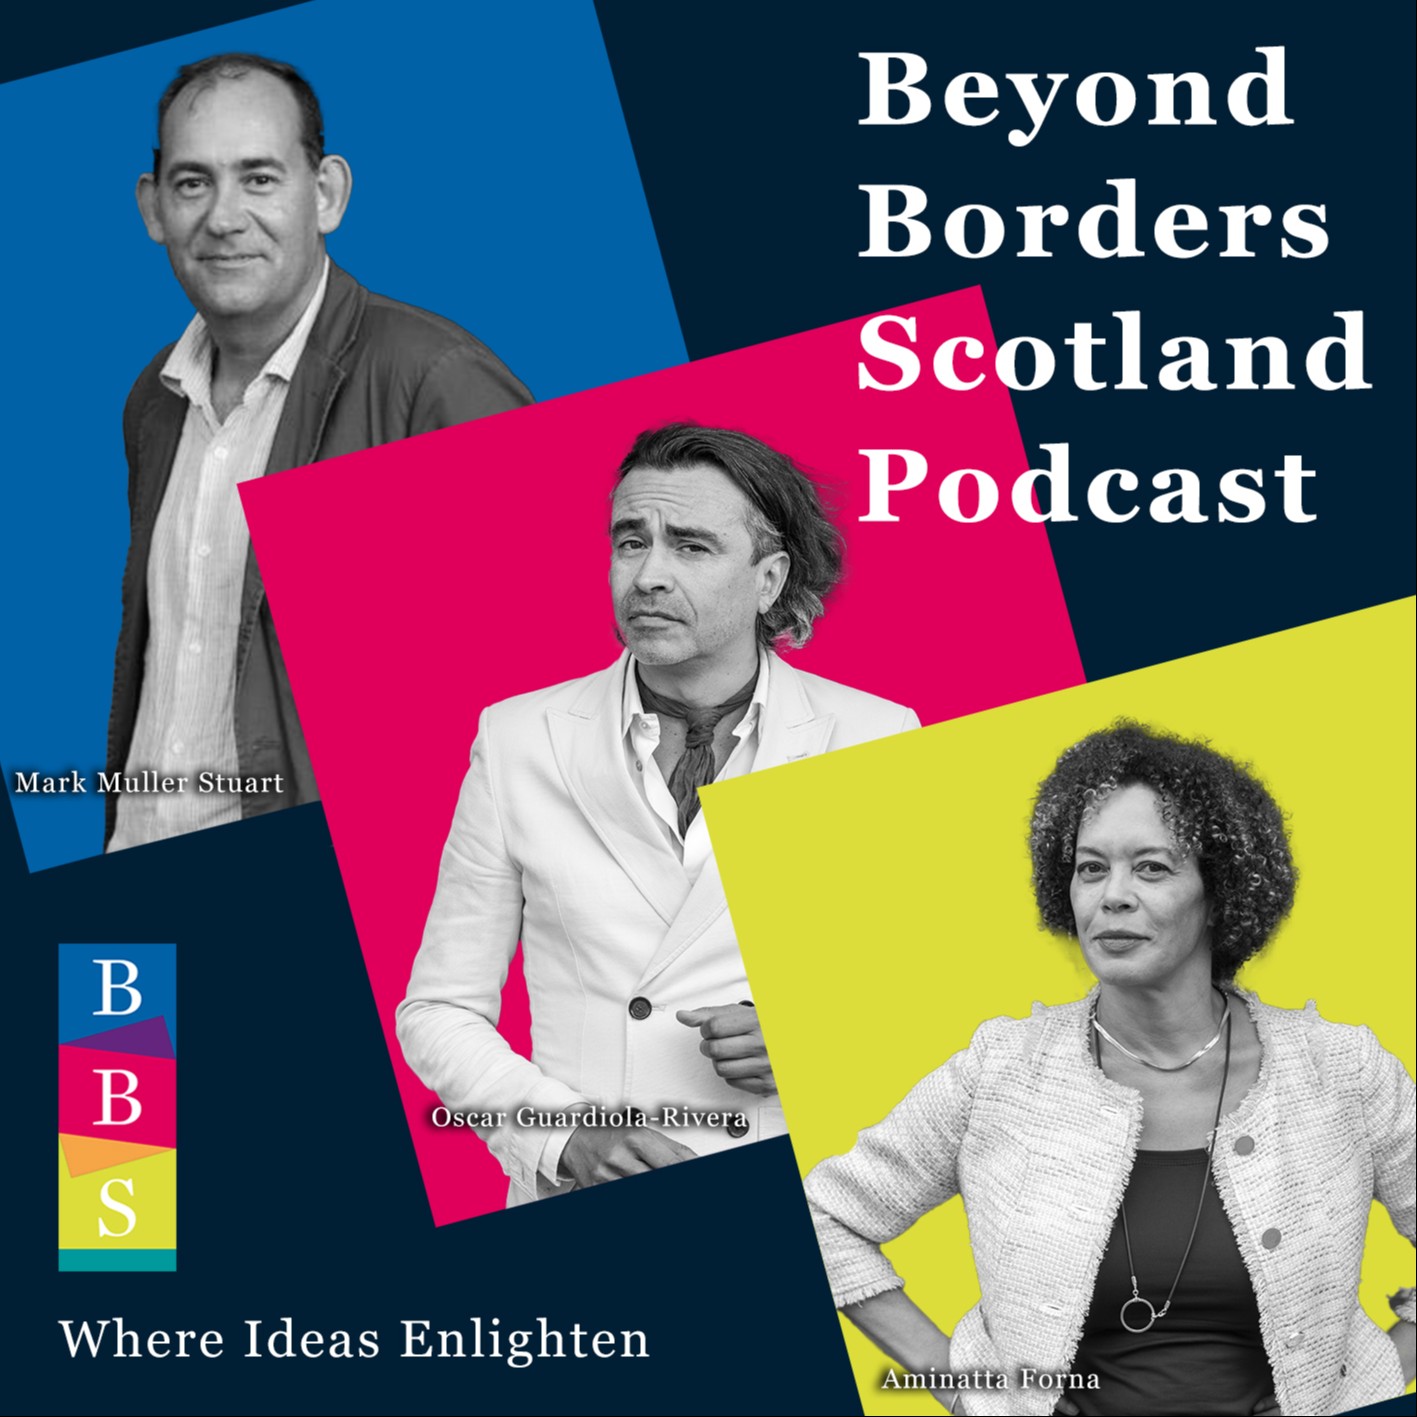 Beyond Borders Scotland Podcast